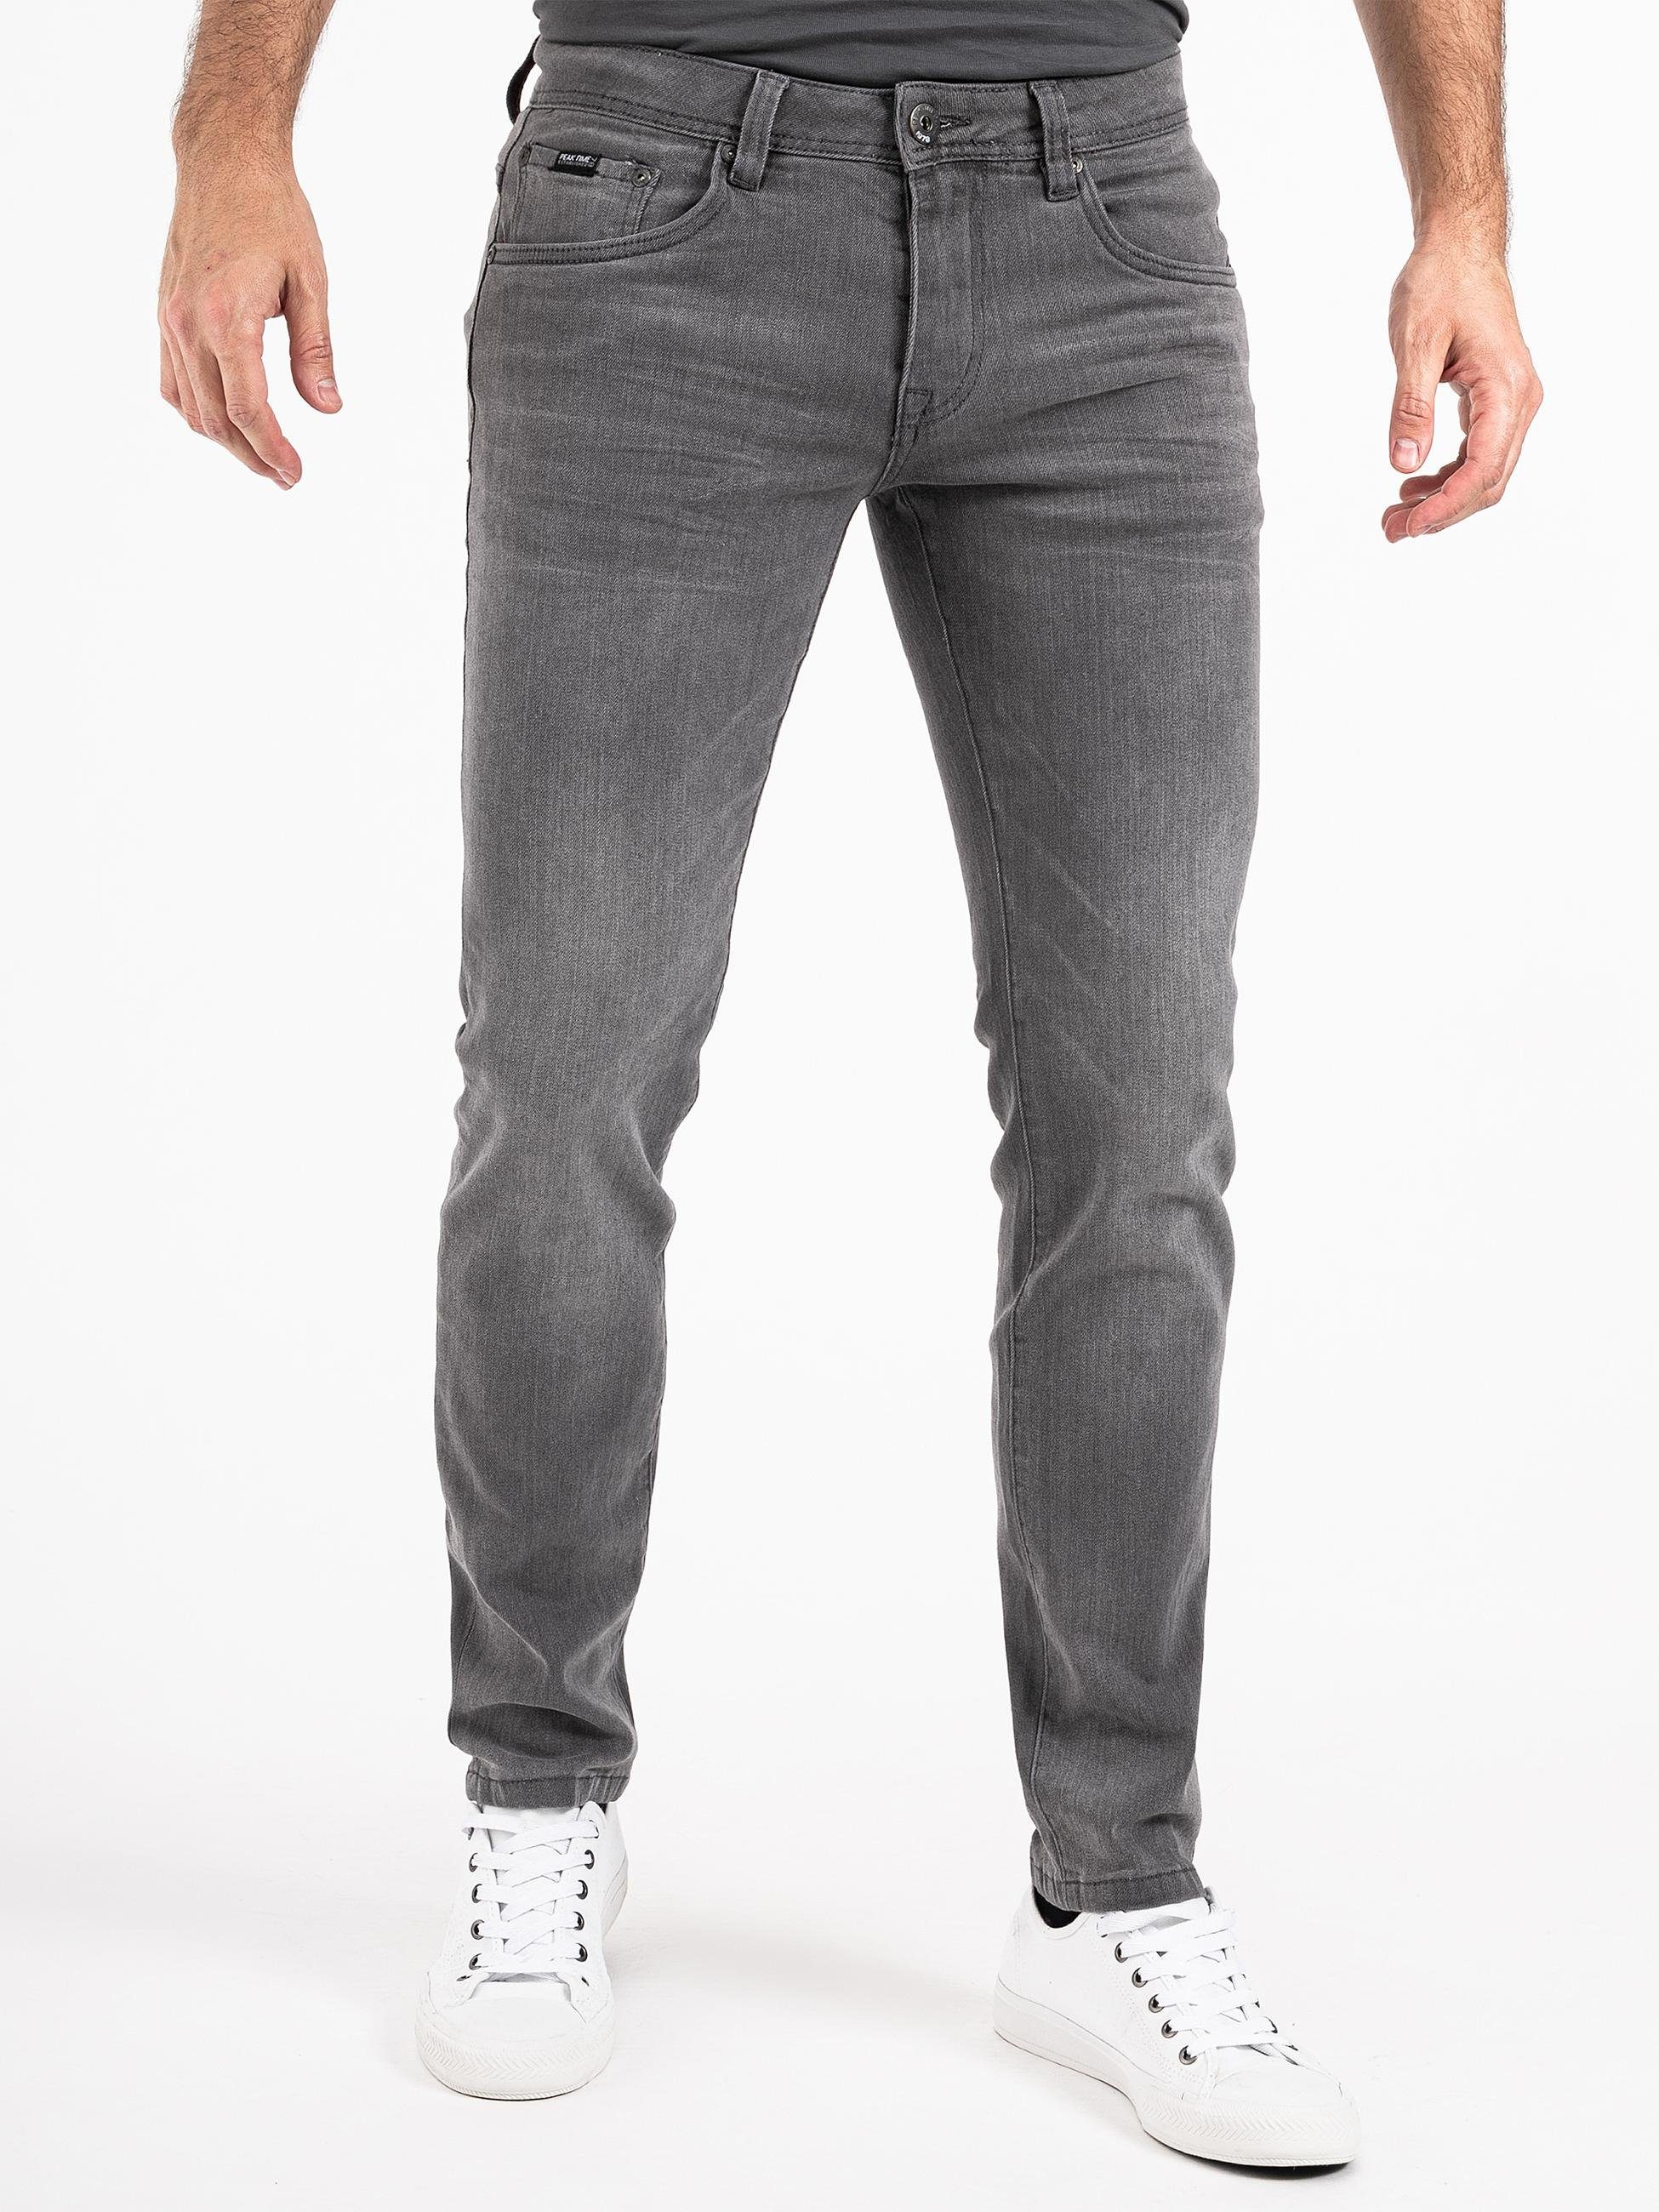 Jeans hellgrau PEAK mit TIME Herren hohem Stretch-Anteil Slim-fit-Jeans super Mailand